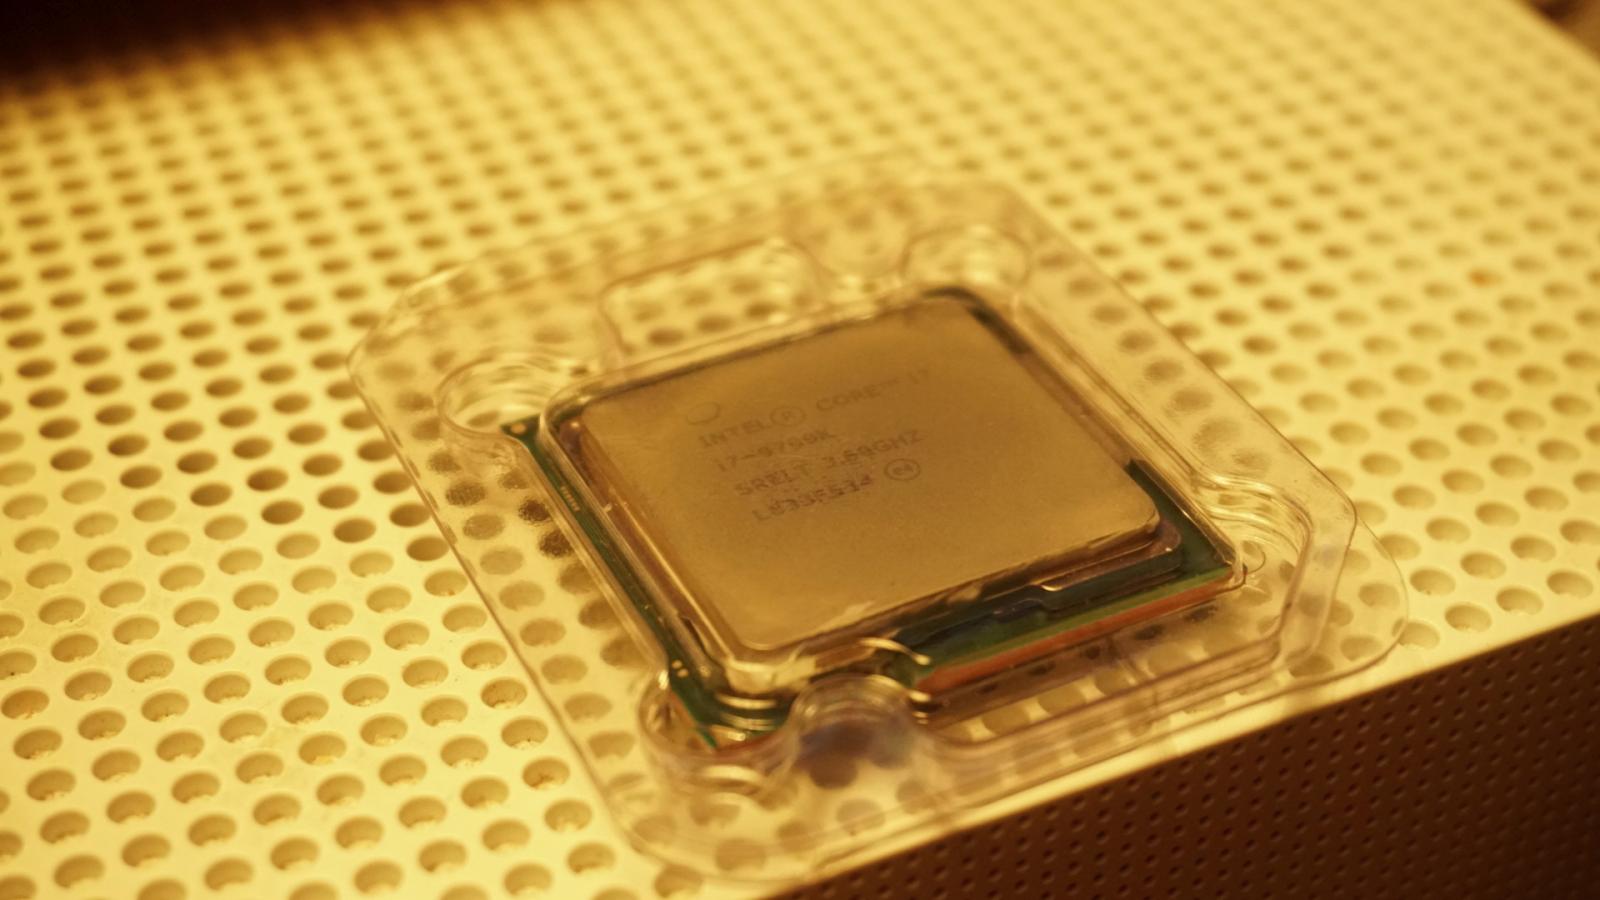 For sale Intel i7-9700k (New)